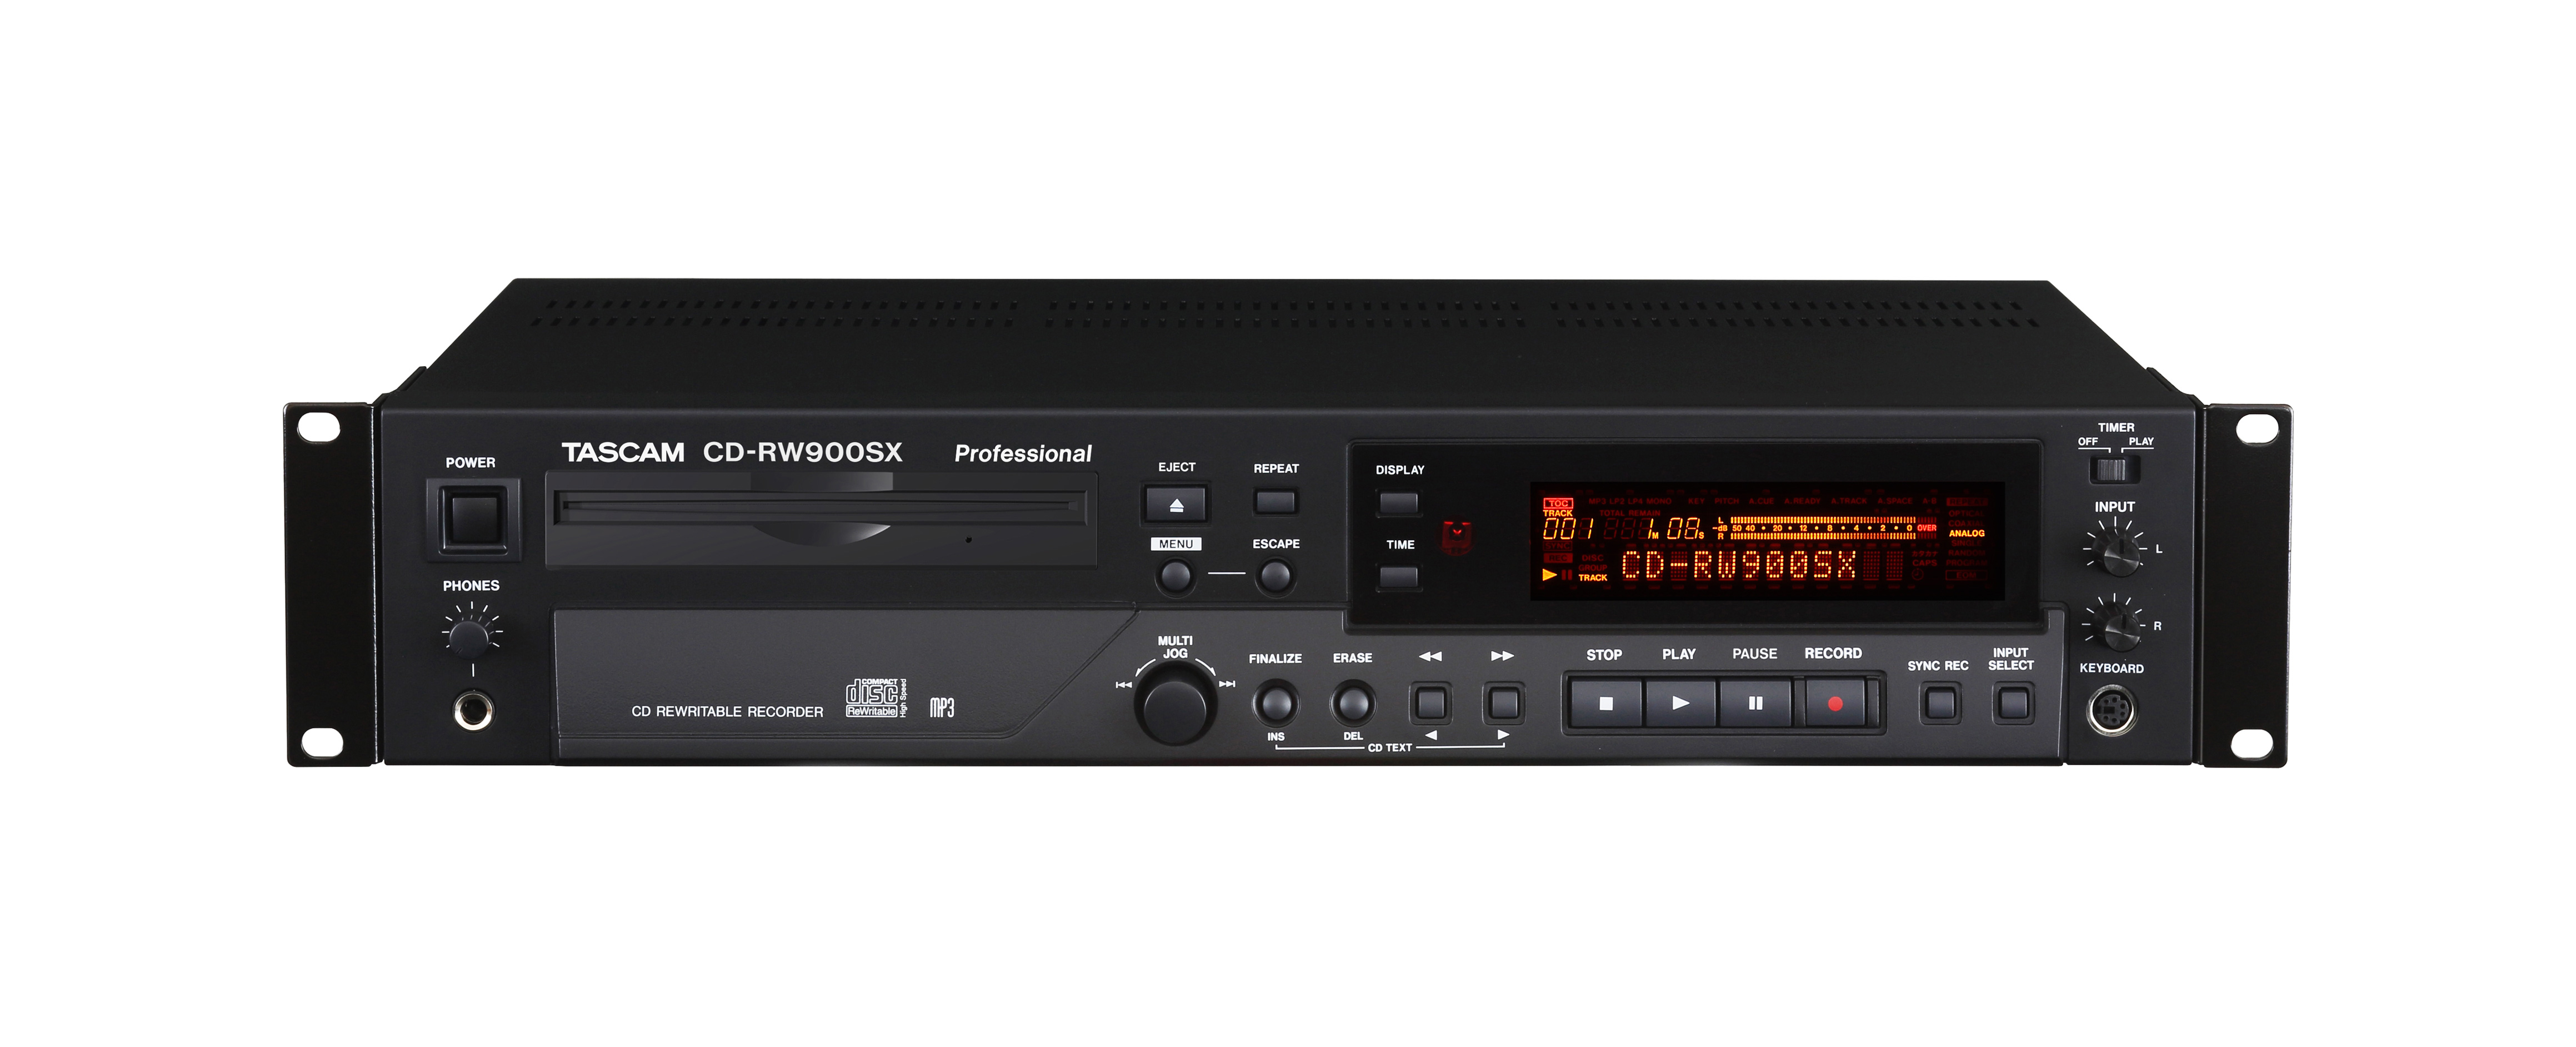 TASCAM Announces the CD-RW900SX CD Recorder/Player